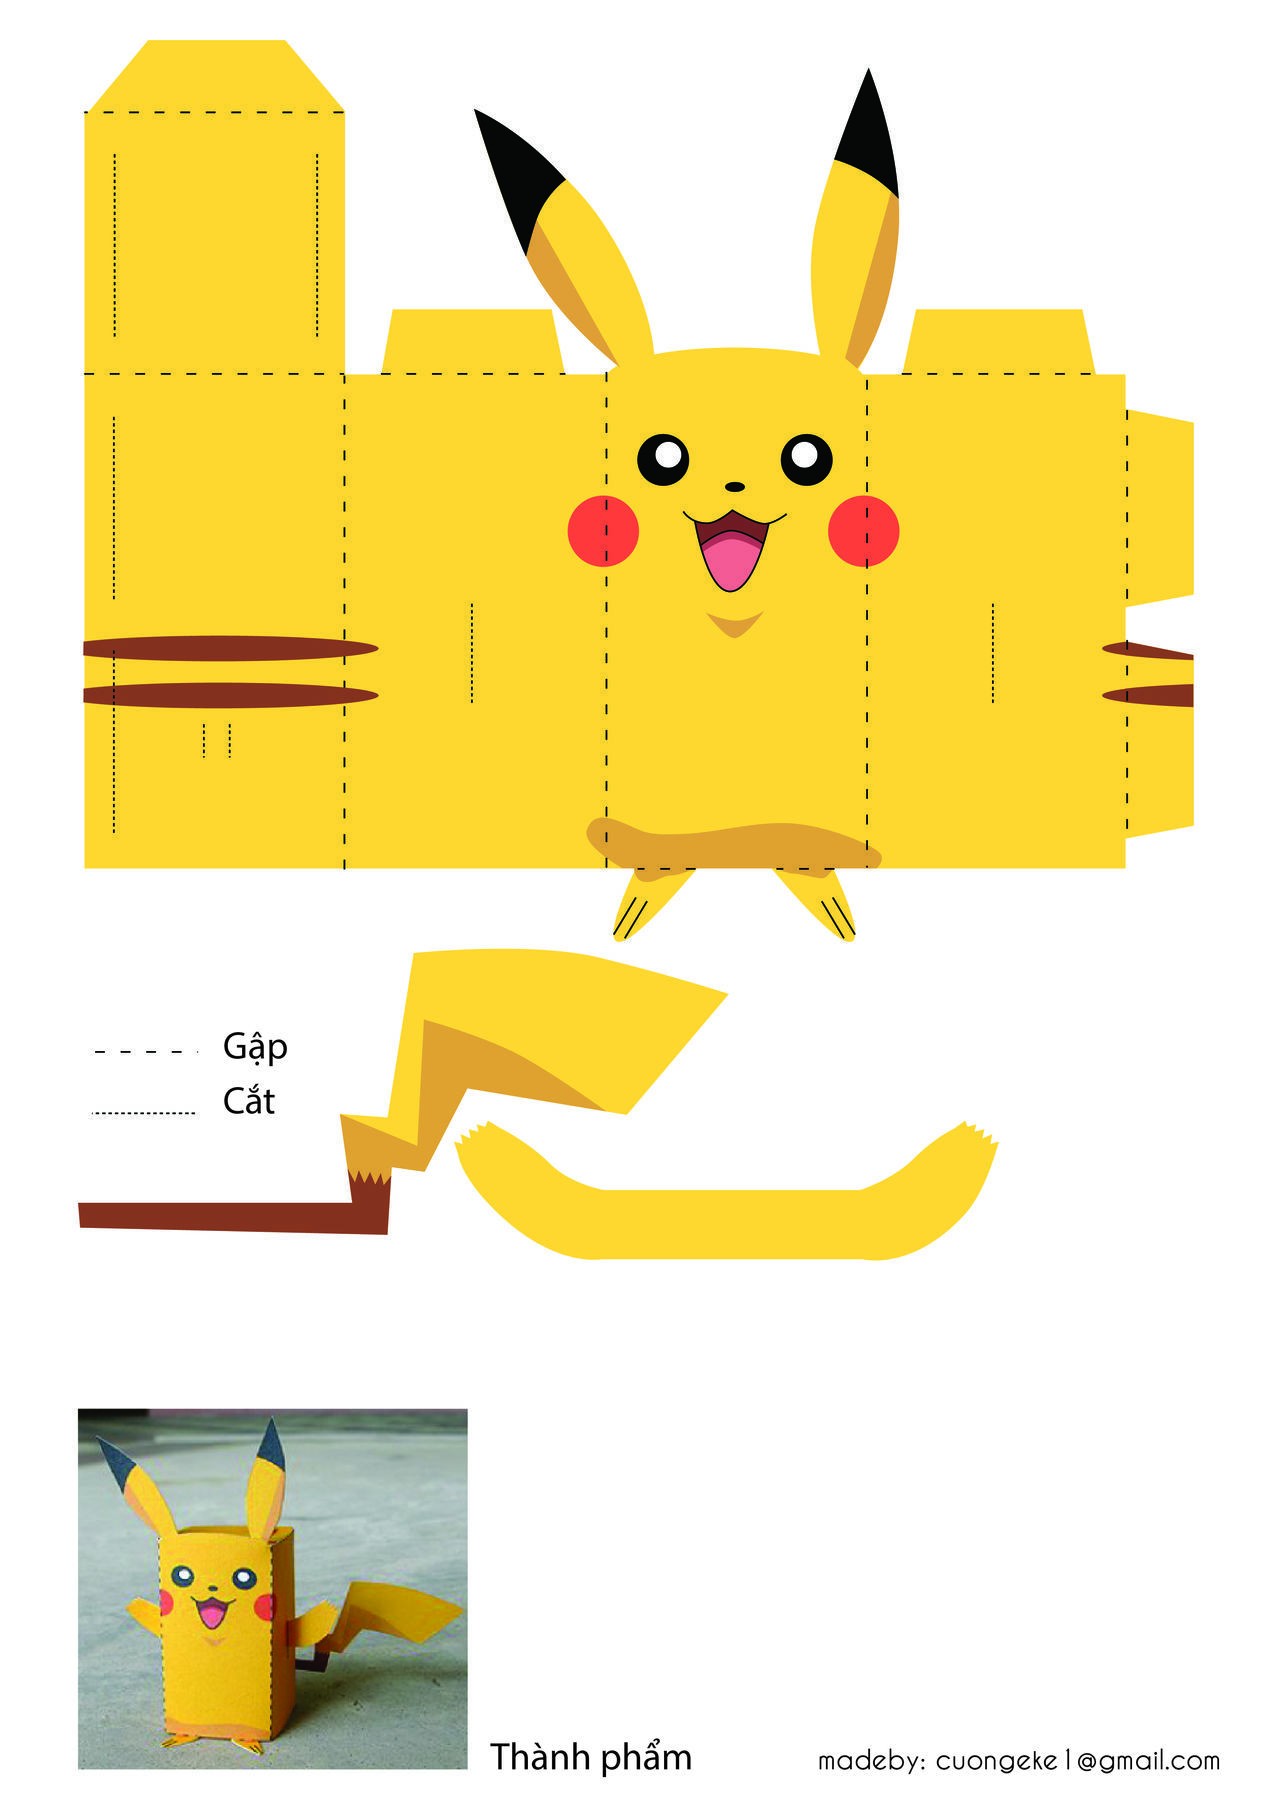 Printable Papercraft Pokemon Pikachu Printable Papercrafts